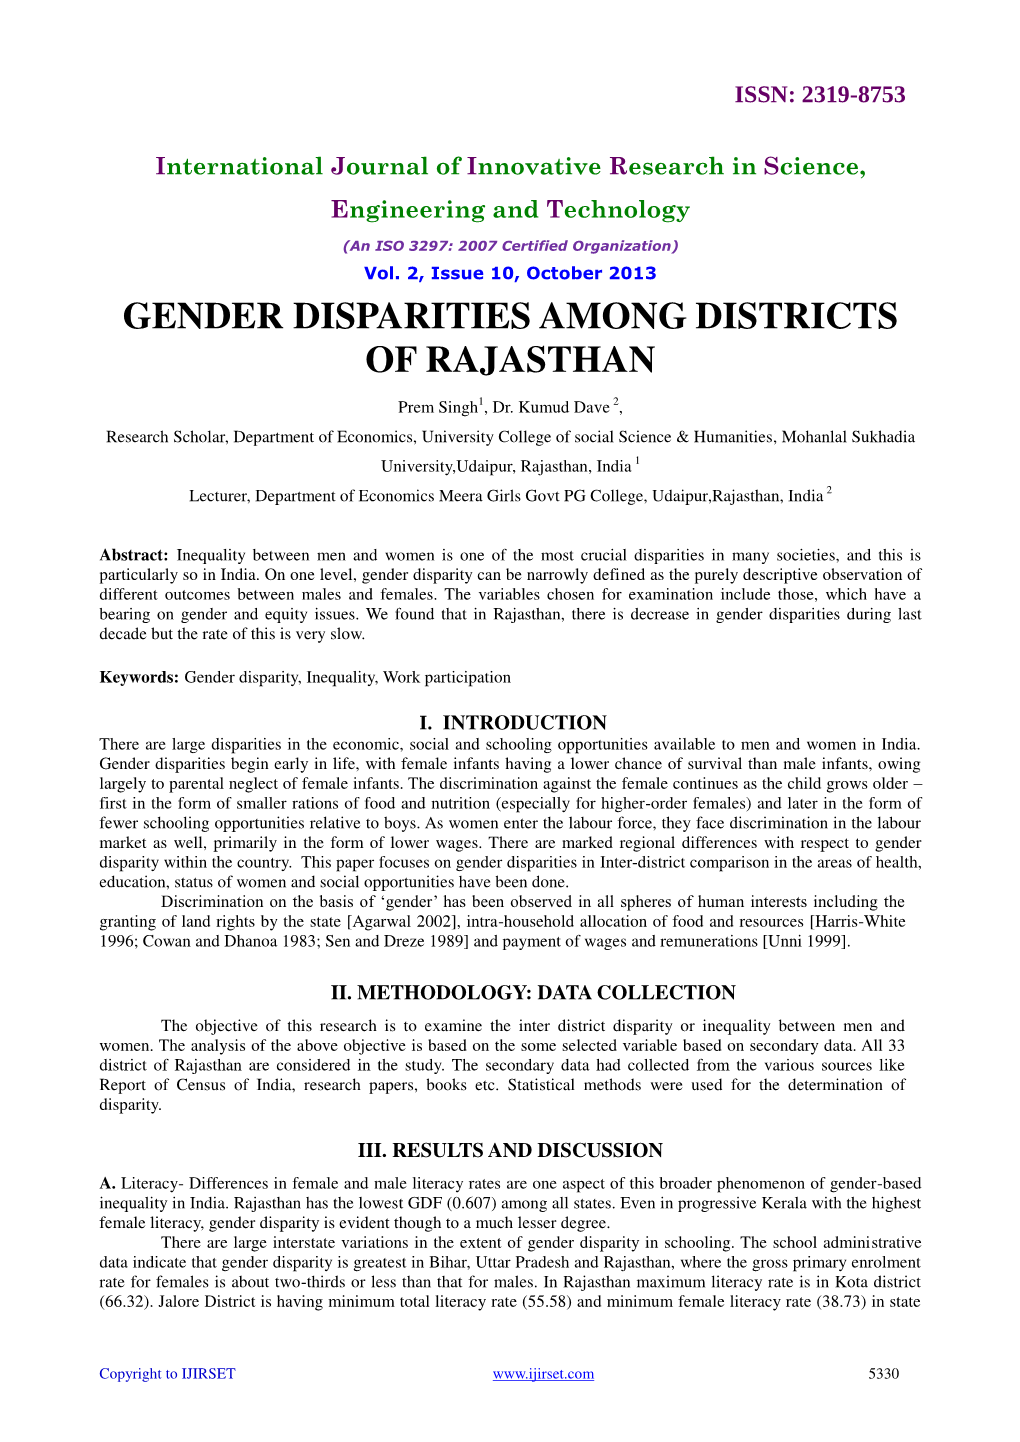 Gender Disparities Among Districts of Rajasthan